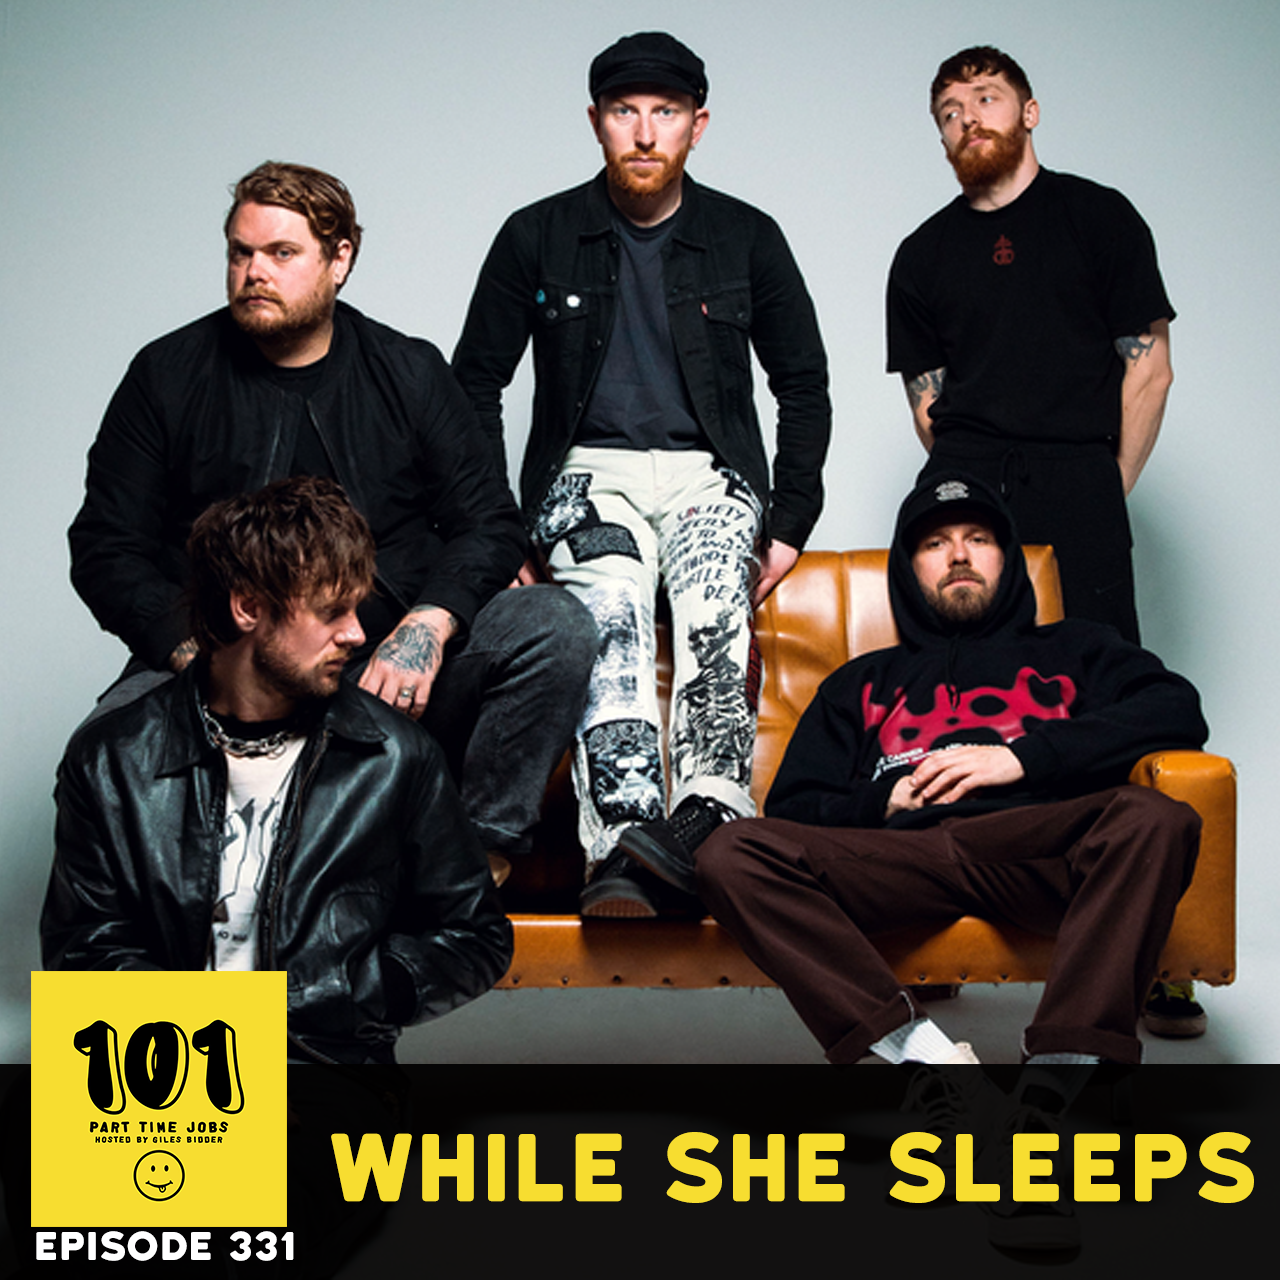 Episode While She Sleeps - "DIY arena band"